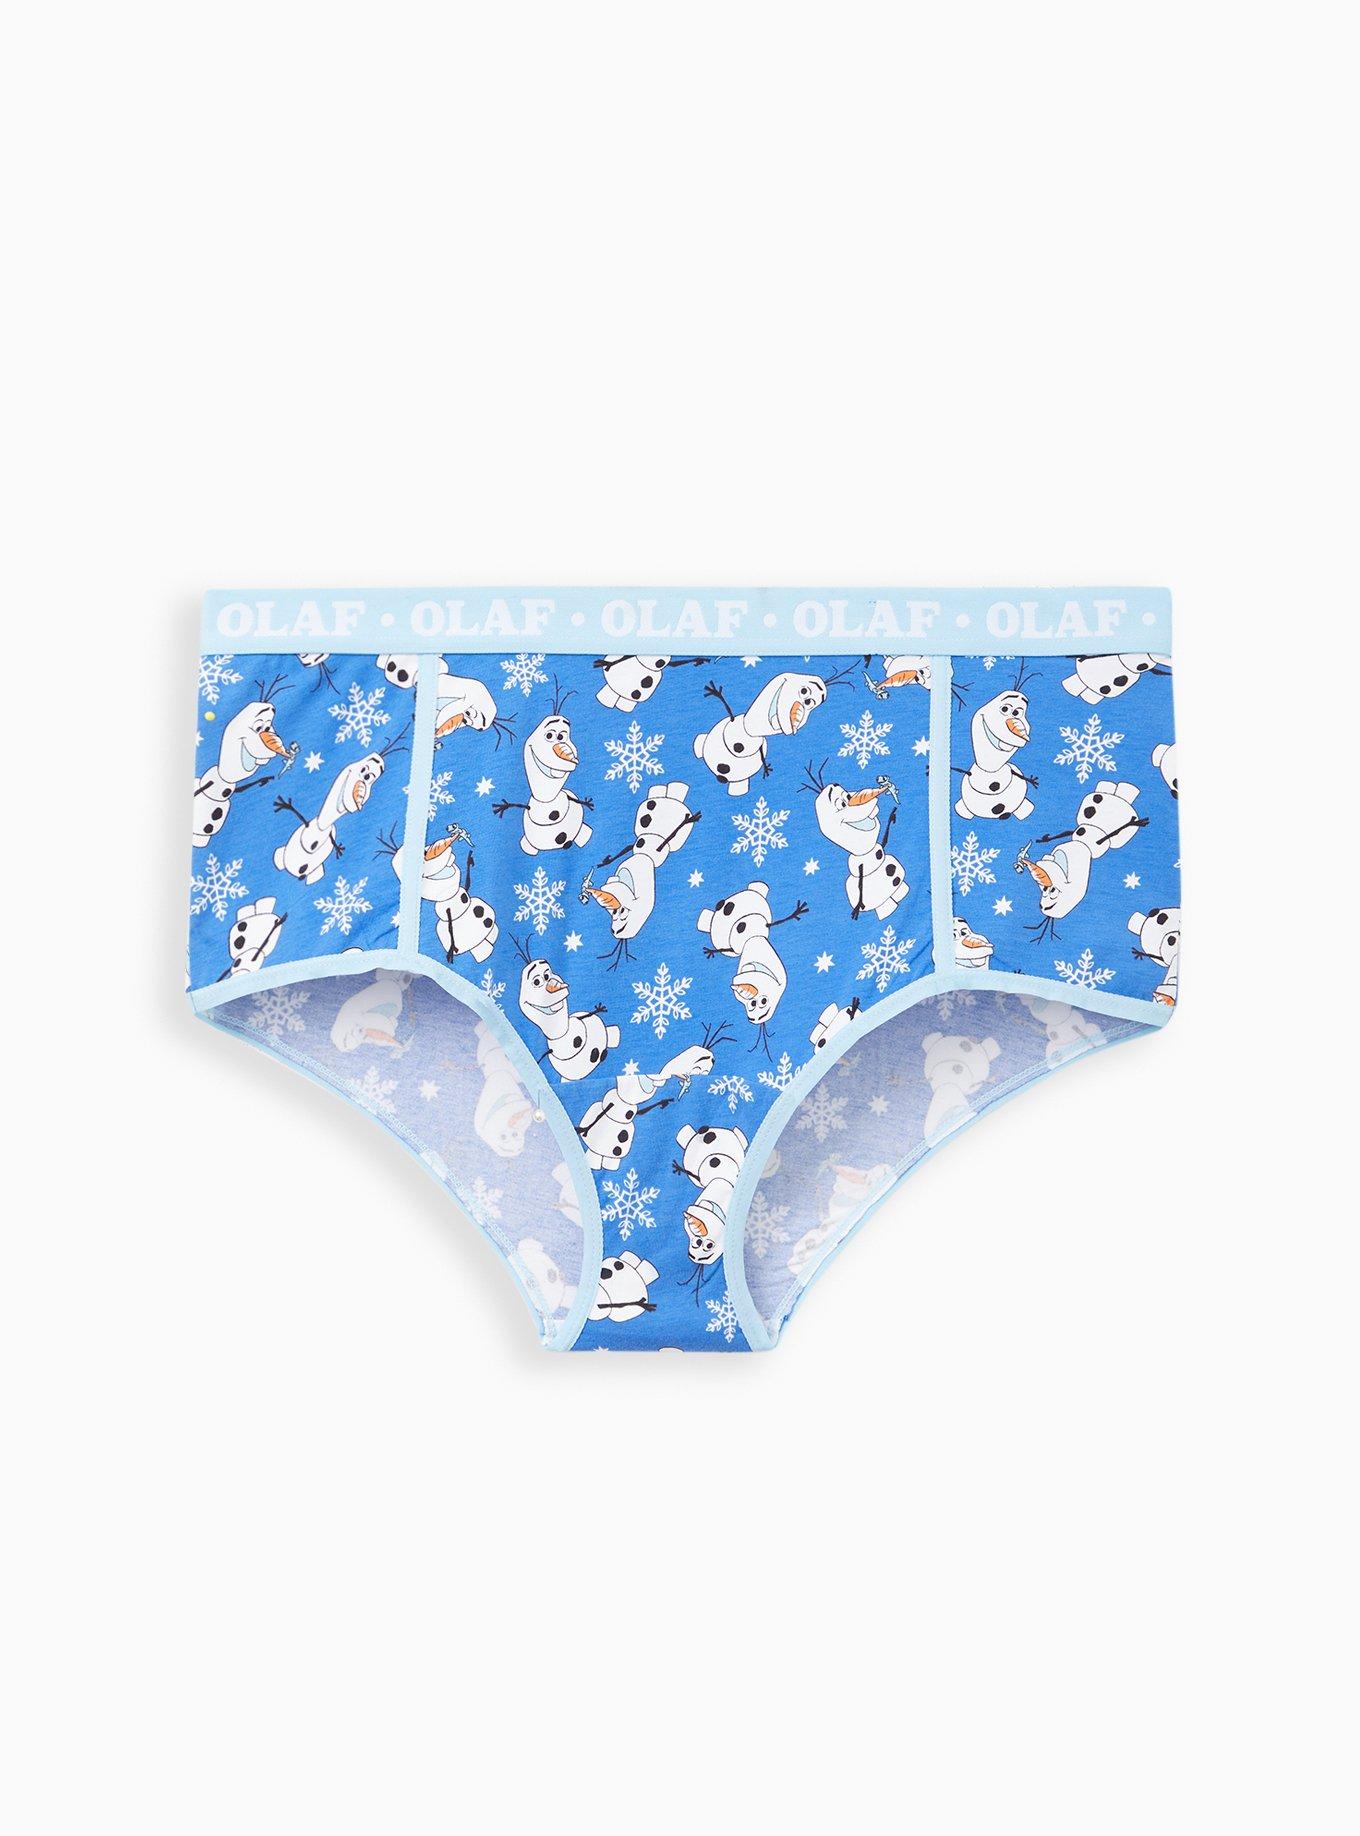 Plus Size - Walt Disney Frozen Boyshort Panty - Cotton Olaf Blue - Torrid